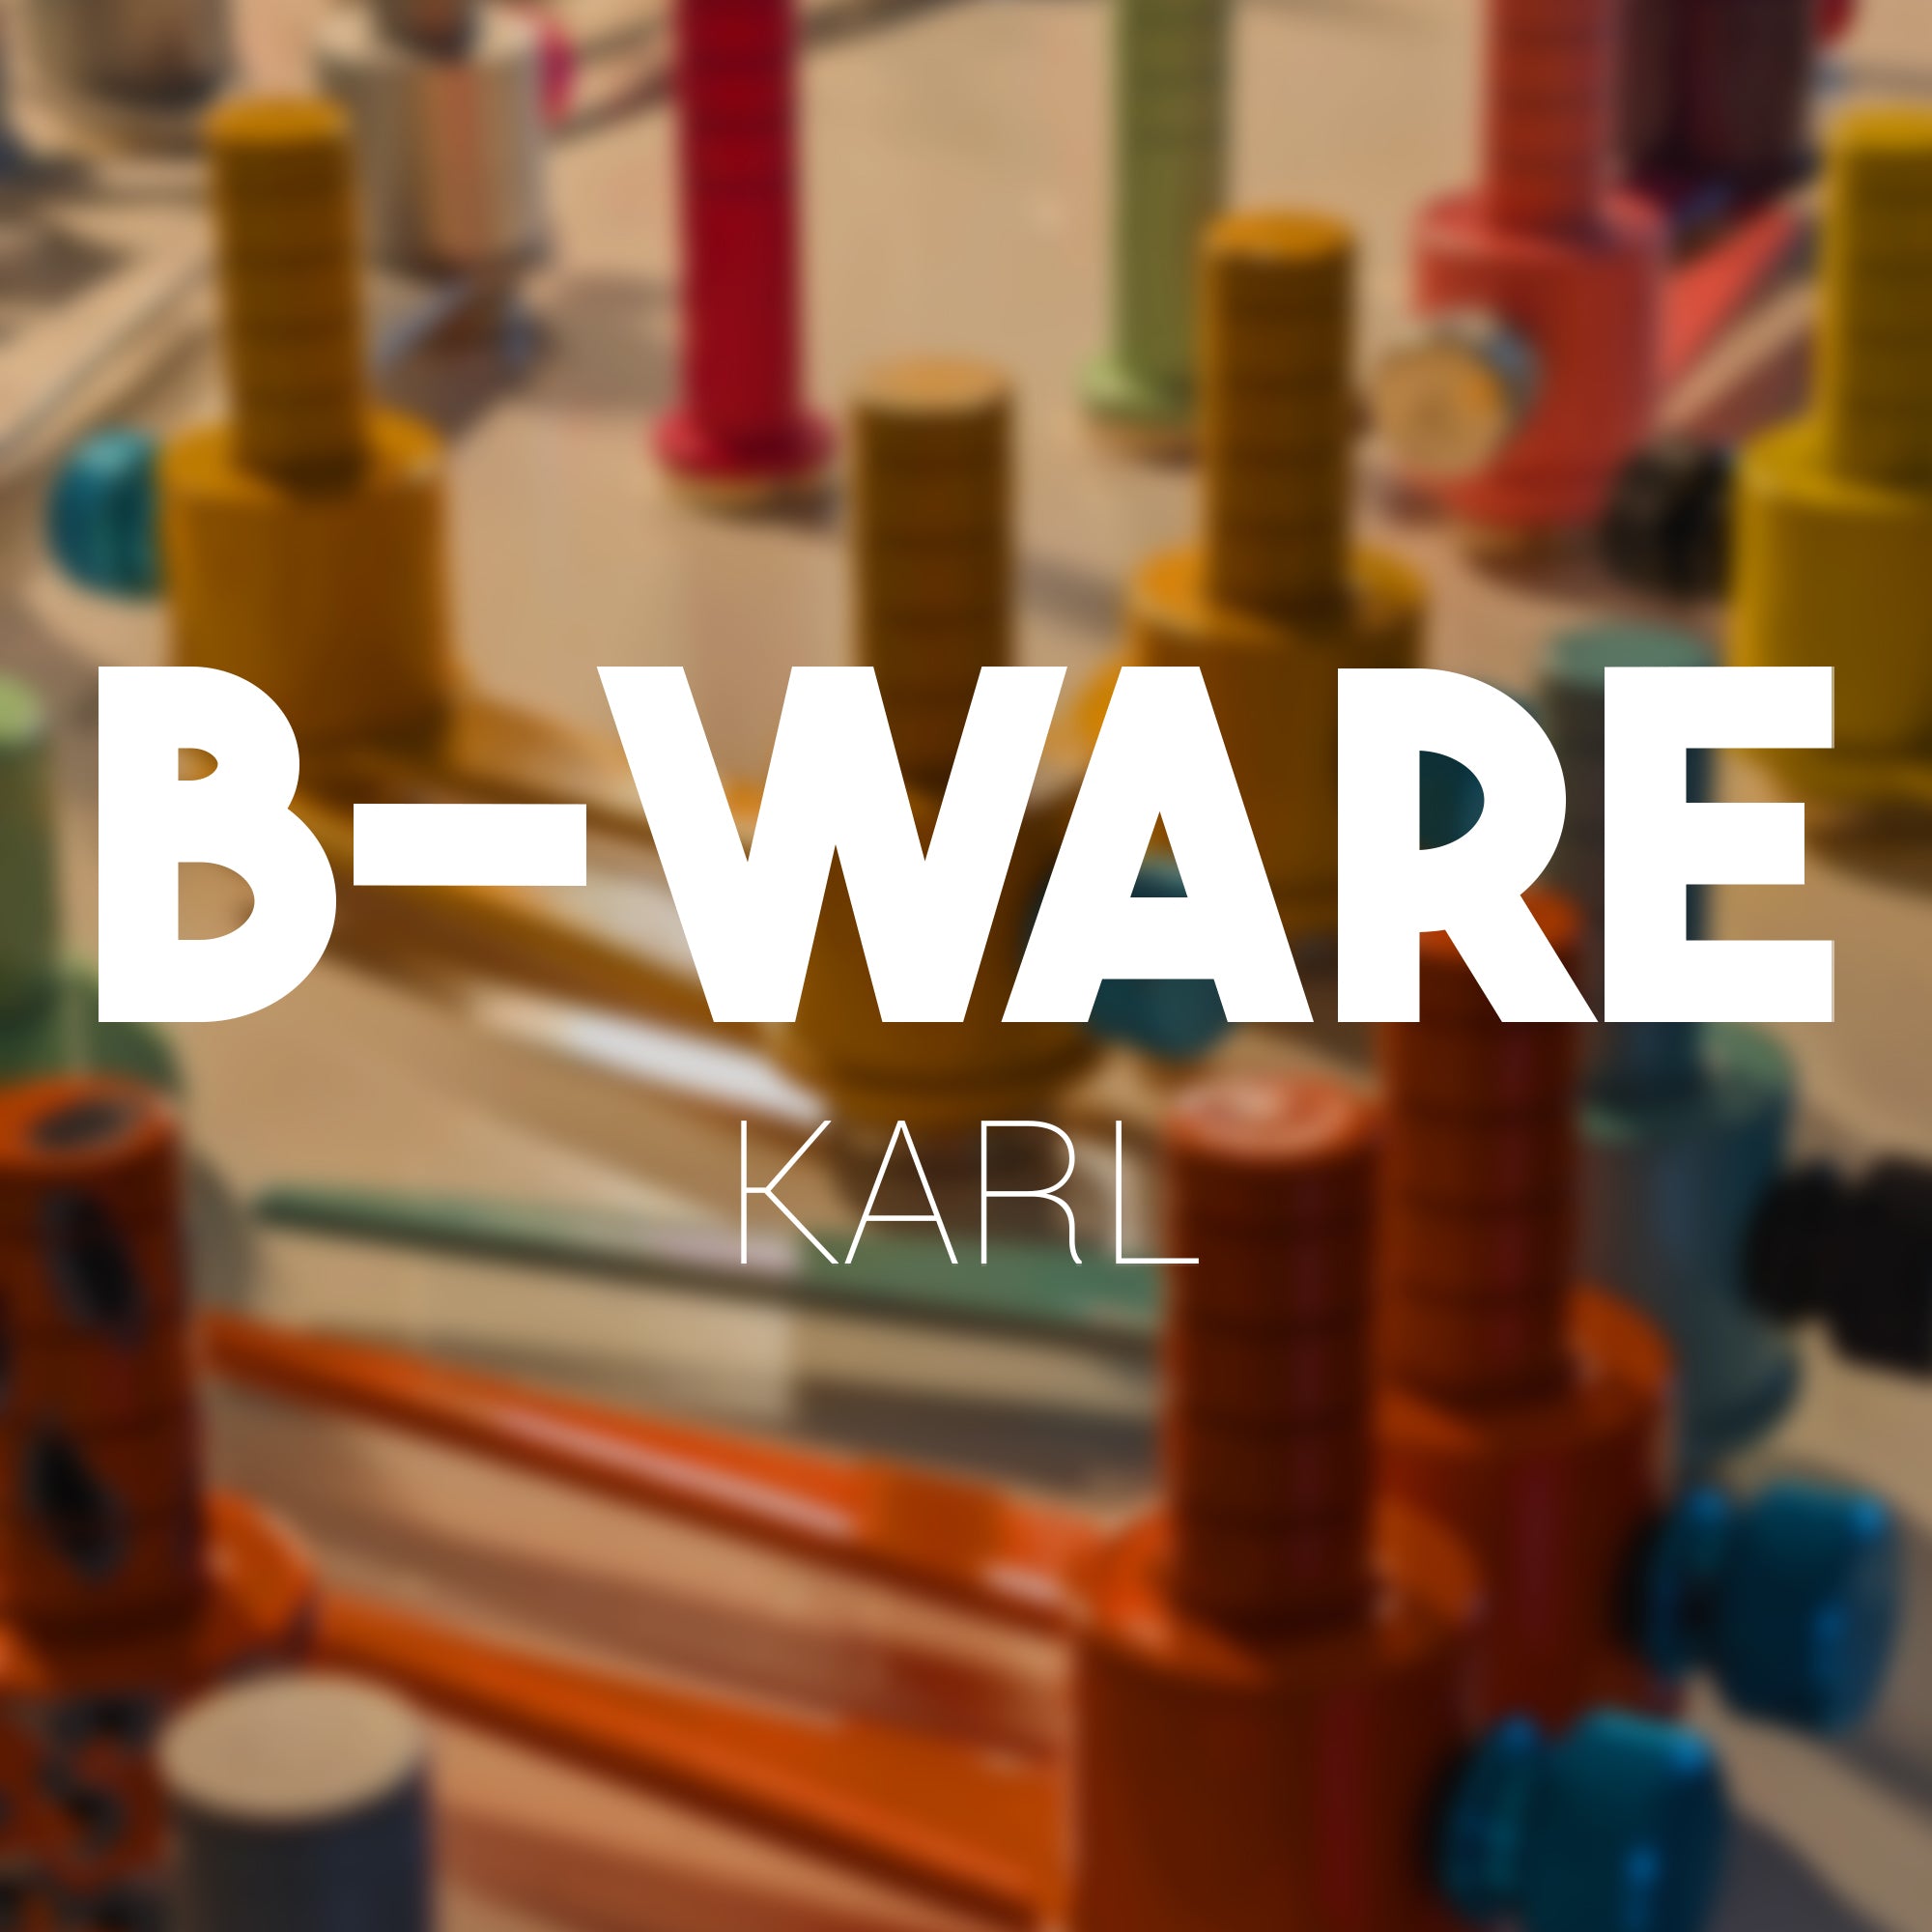 B-WARE: Karl